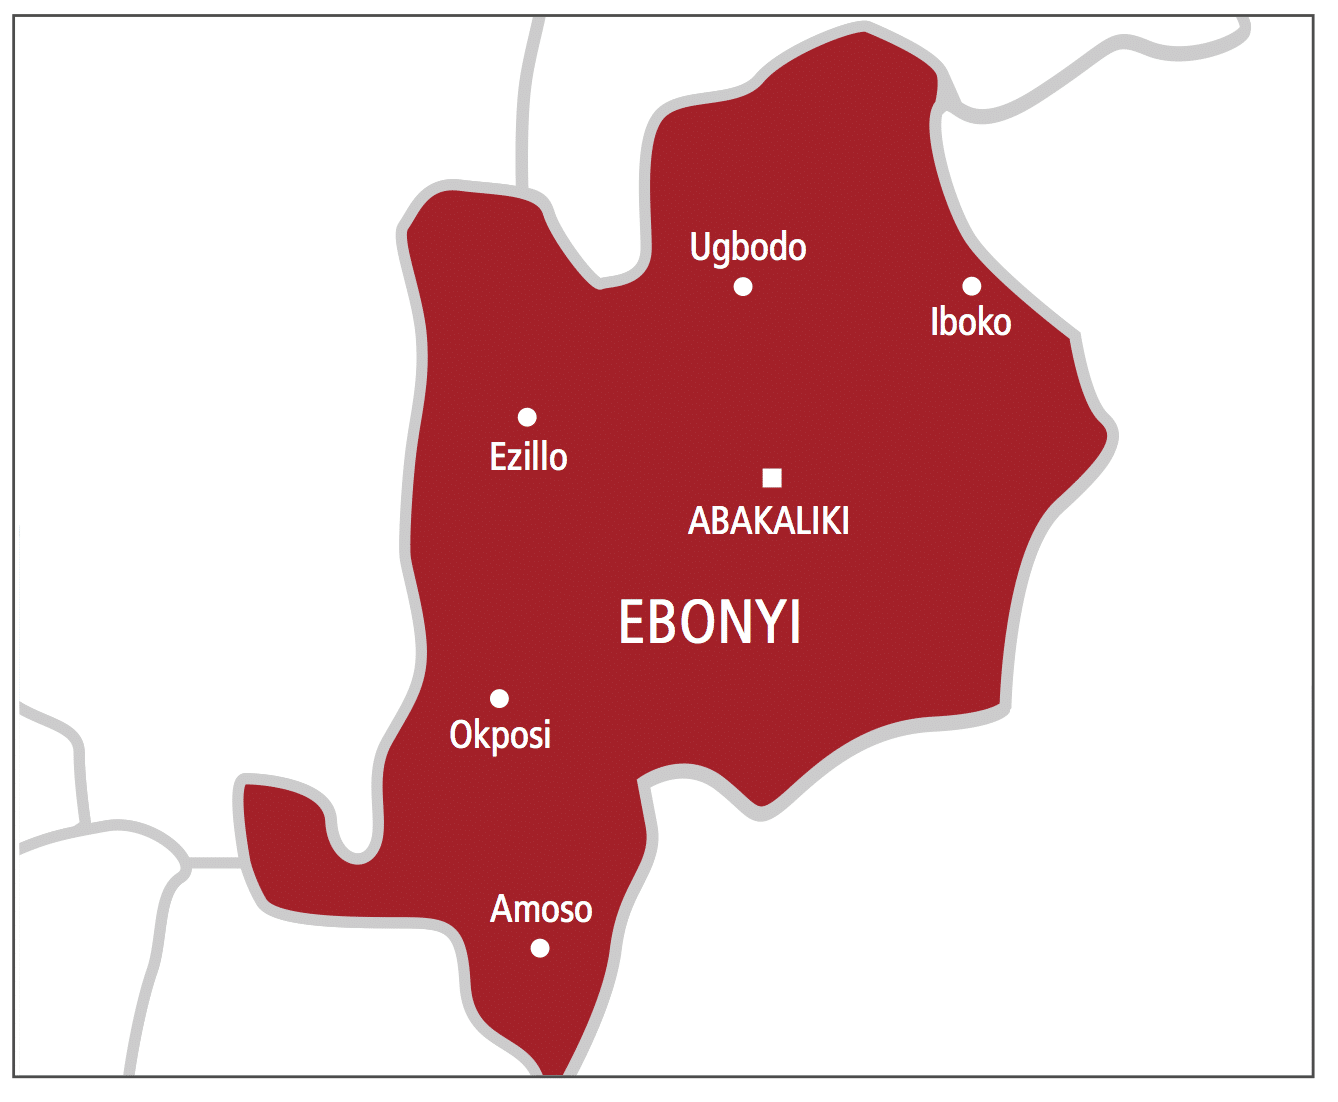 Ebonyi ranks 5th in fiscal transparency